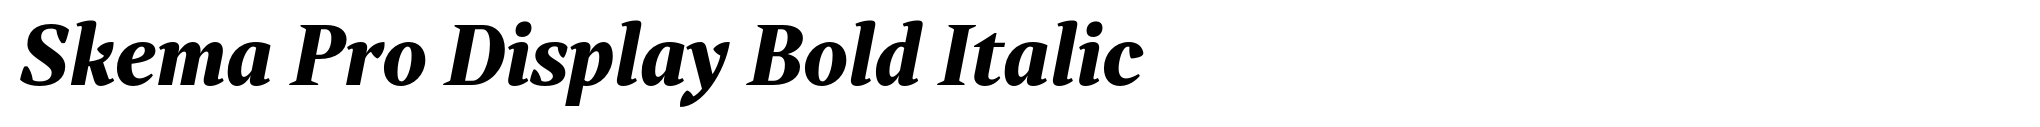 Skema Pro Display Bold Italic image